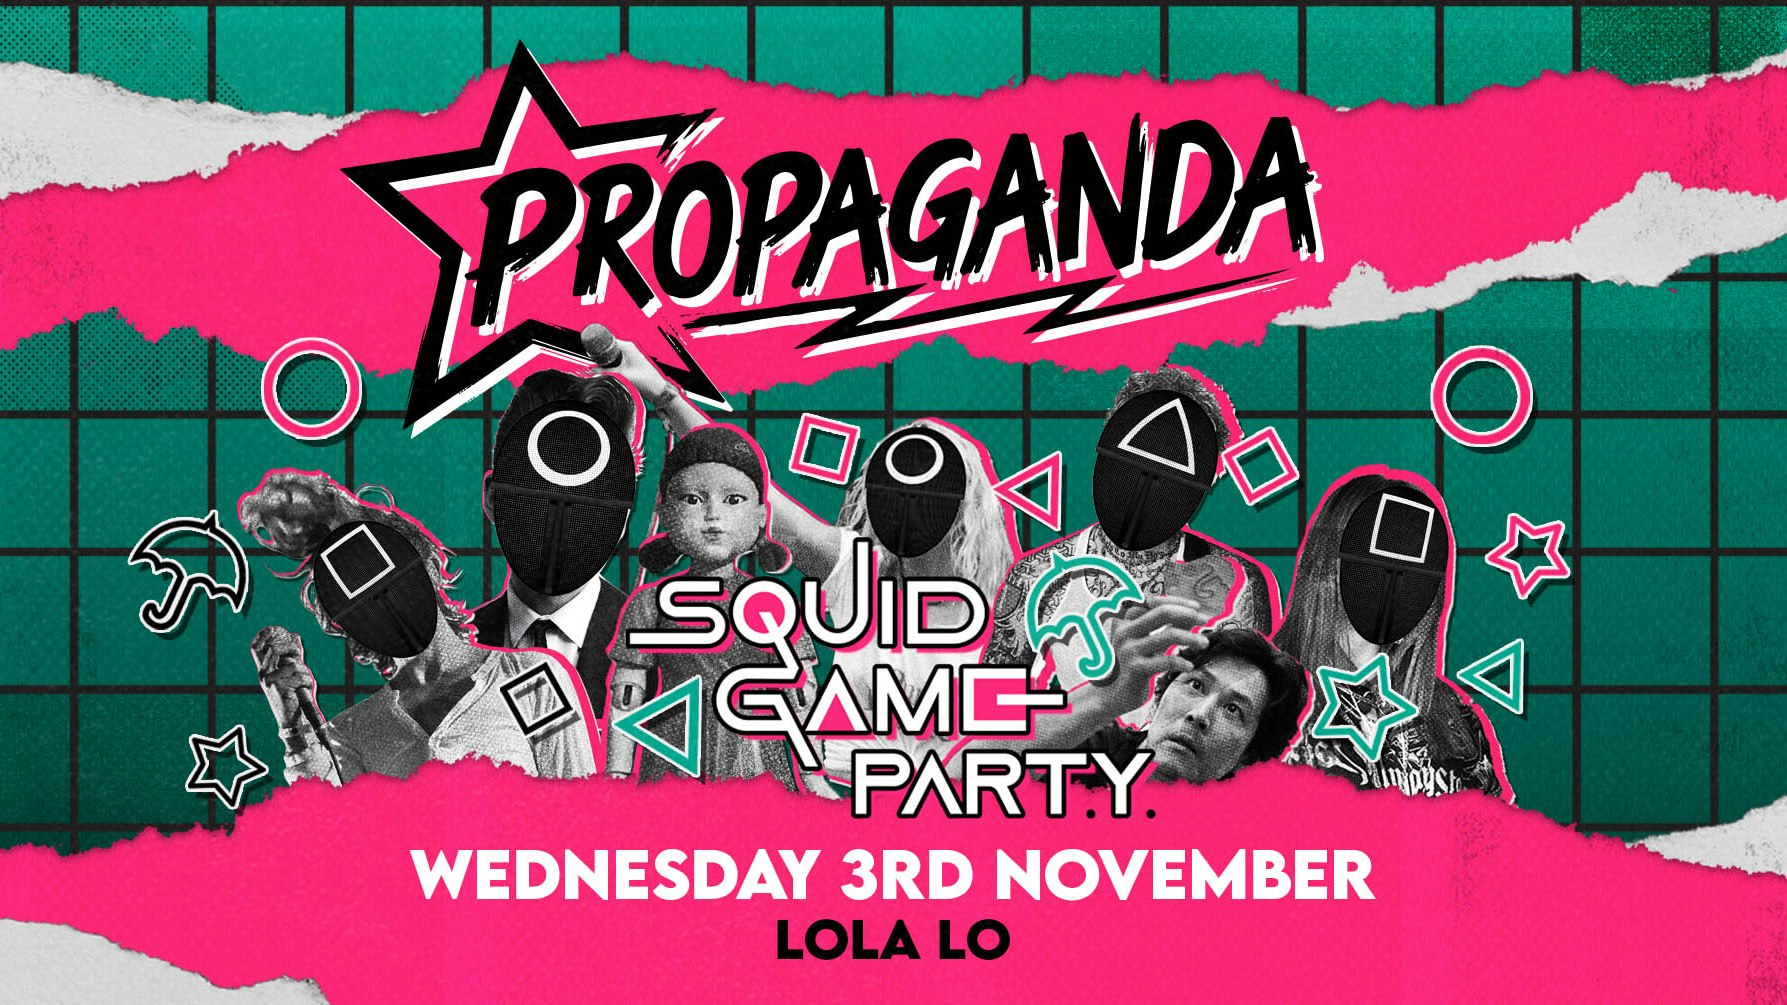 Propaganda Cambridge – Squid Game Party!